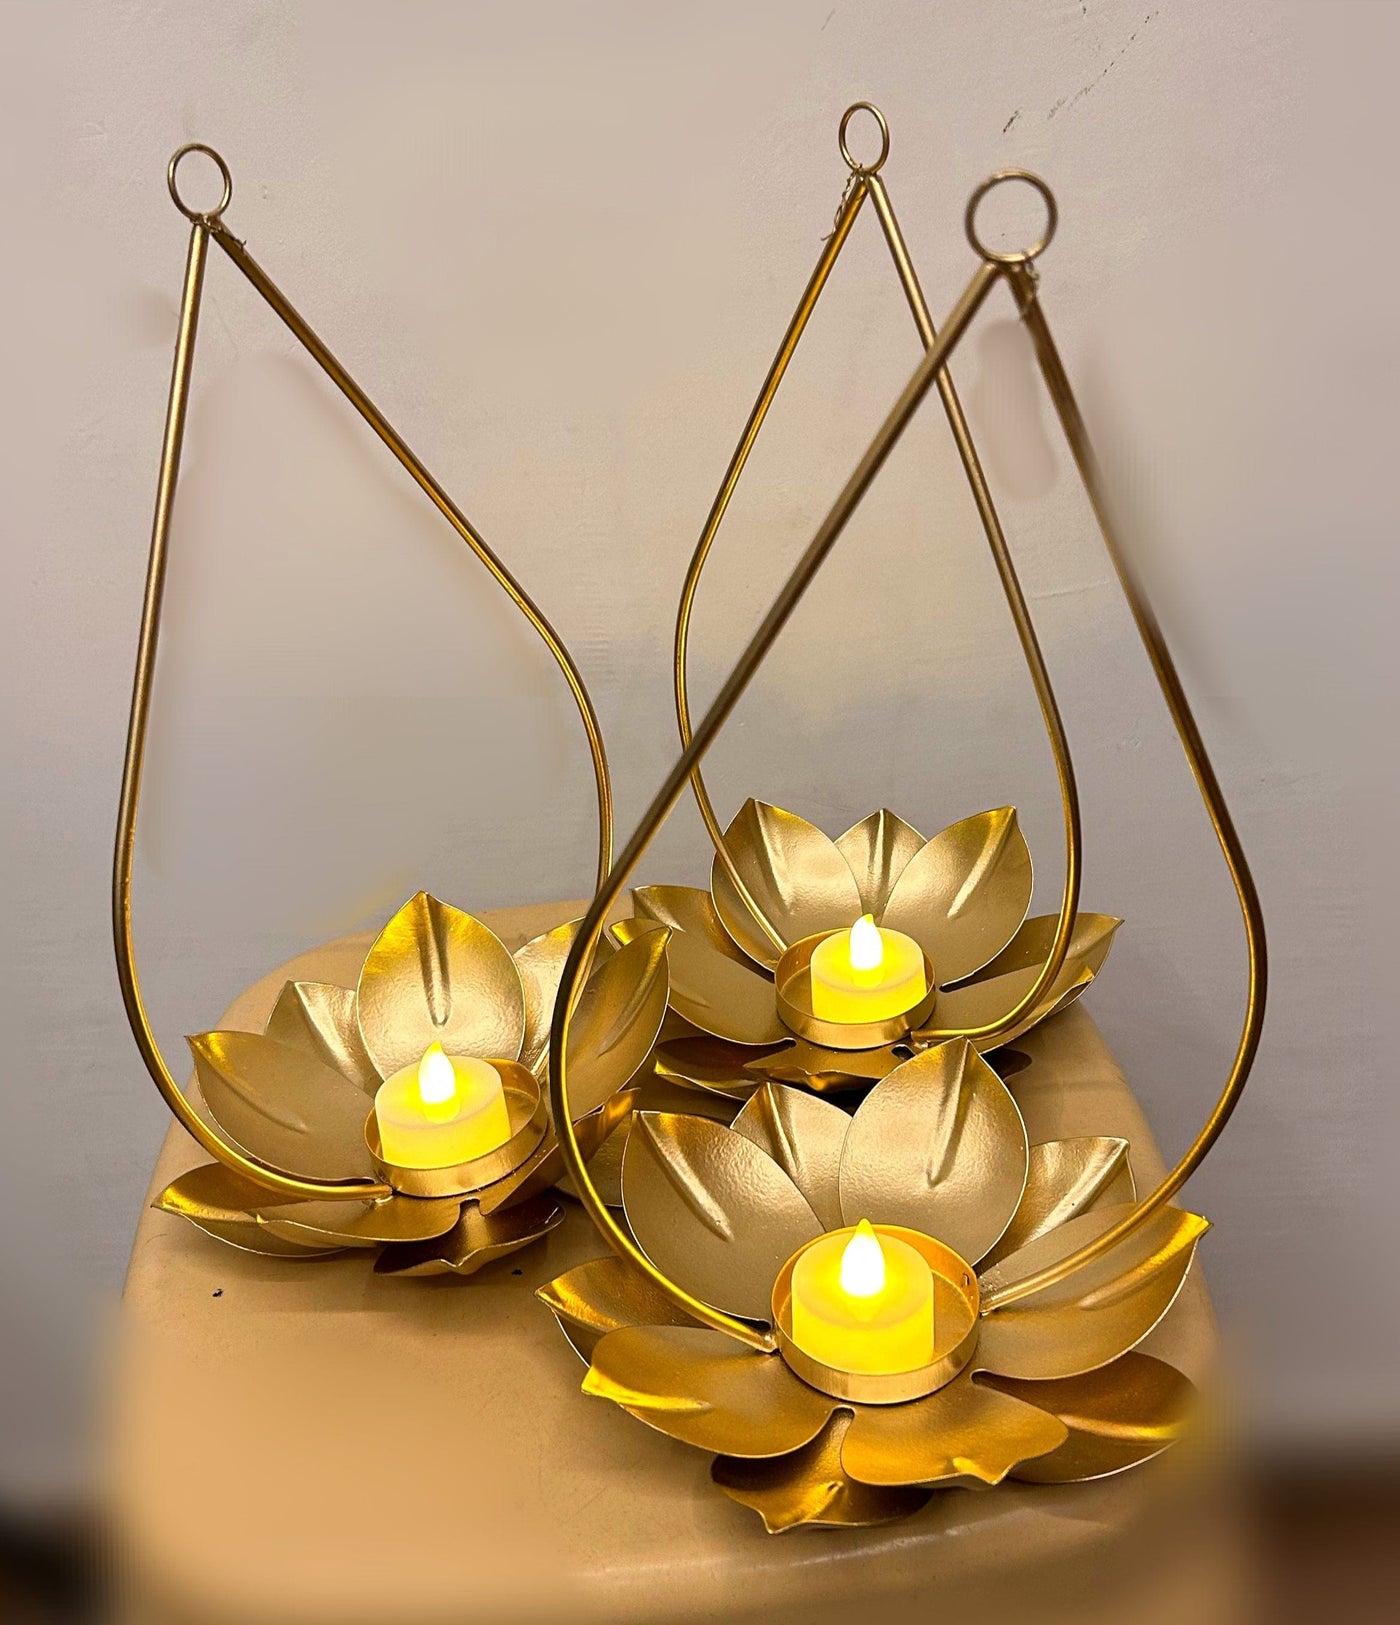 Lamansh metal candle holder LAMANSH Diya shape Decorative Metal tealight candle holder stand | Diya stand for diwali 🕯️